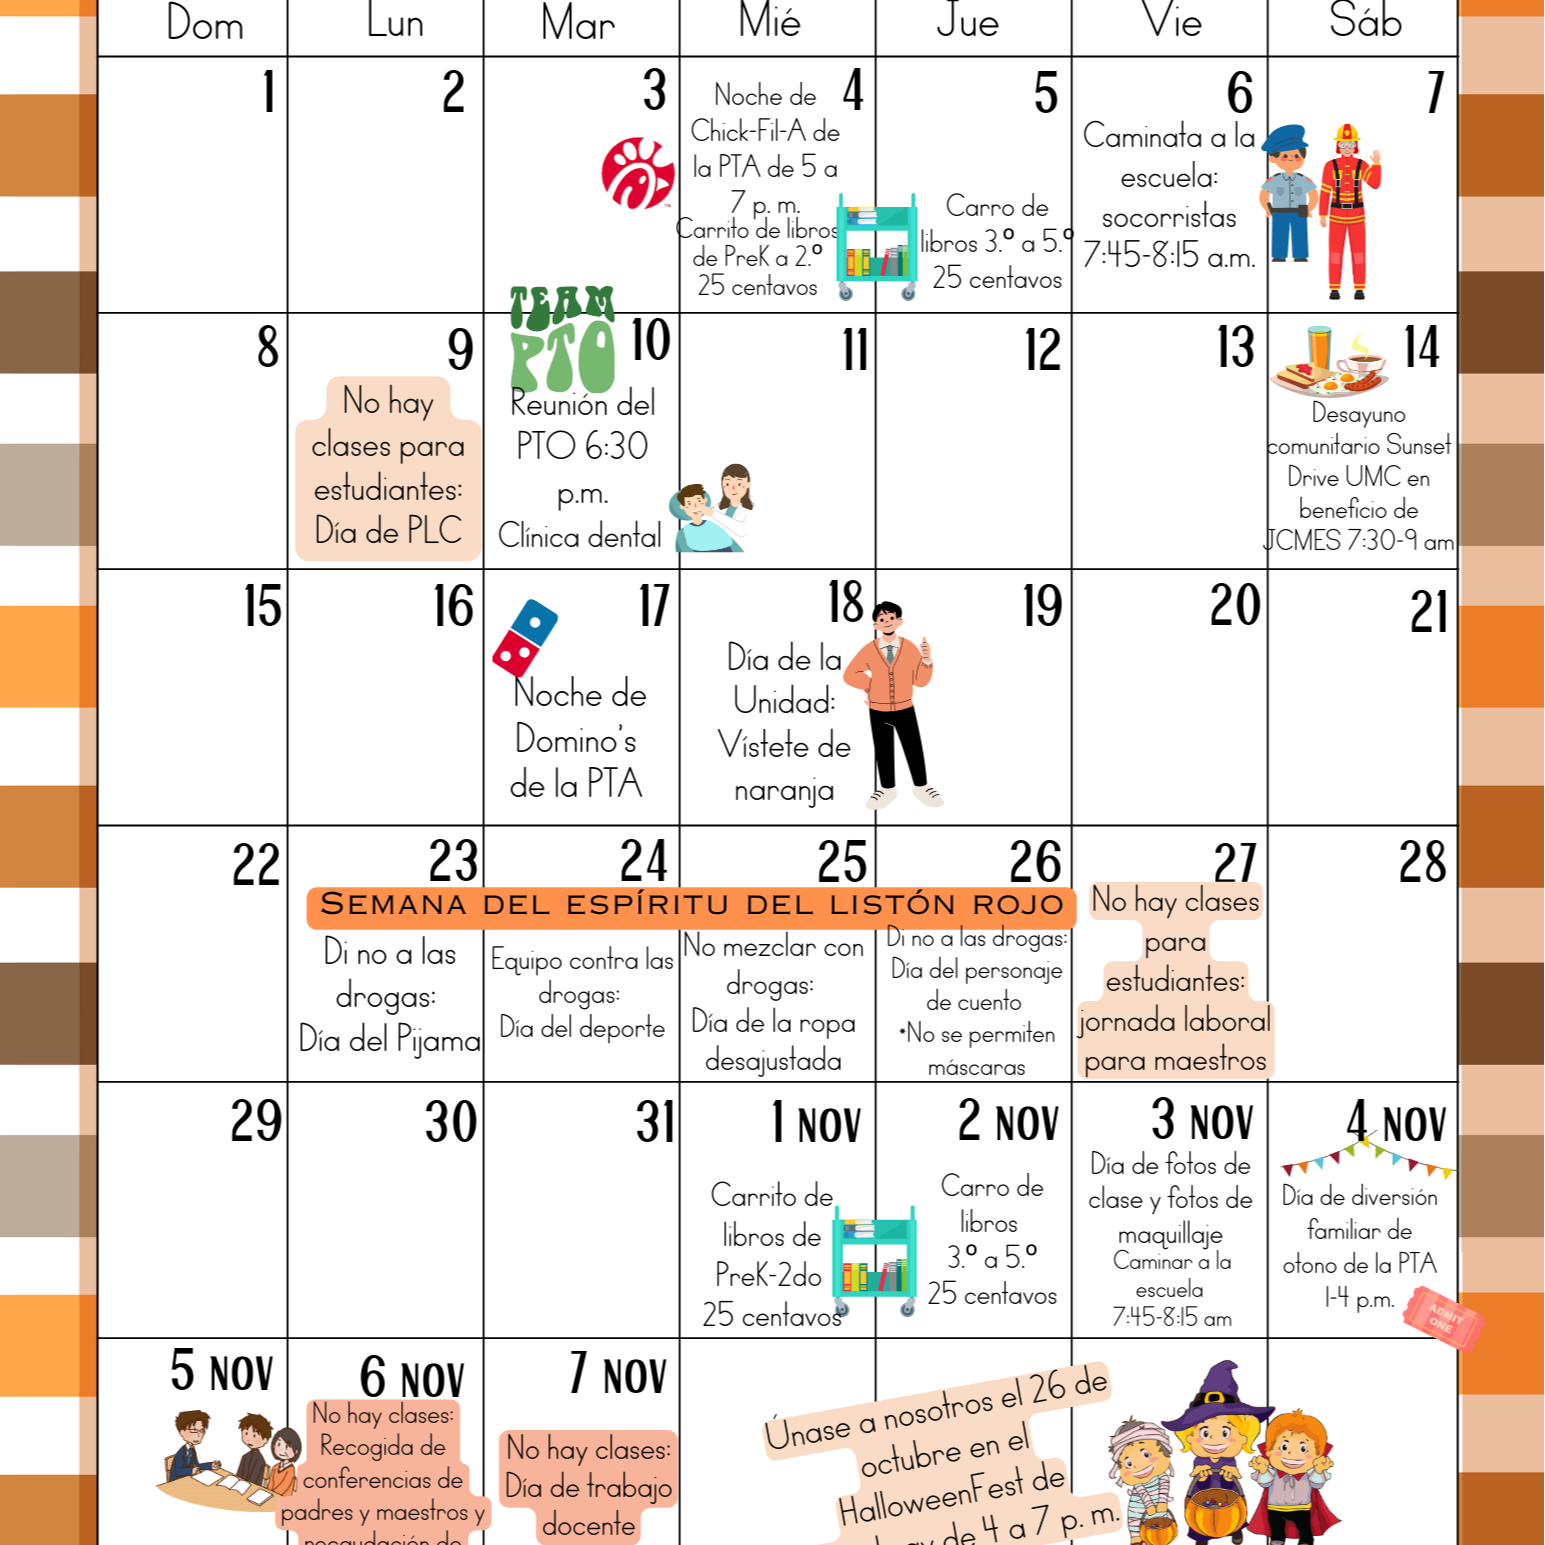 October Events Calendar in Spanish